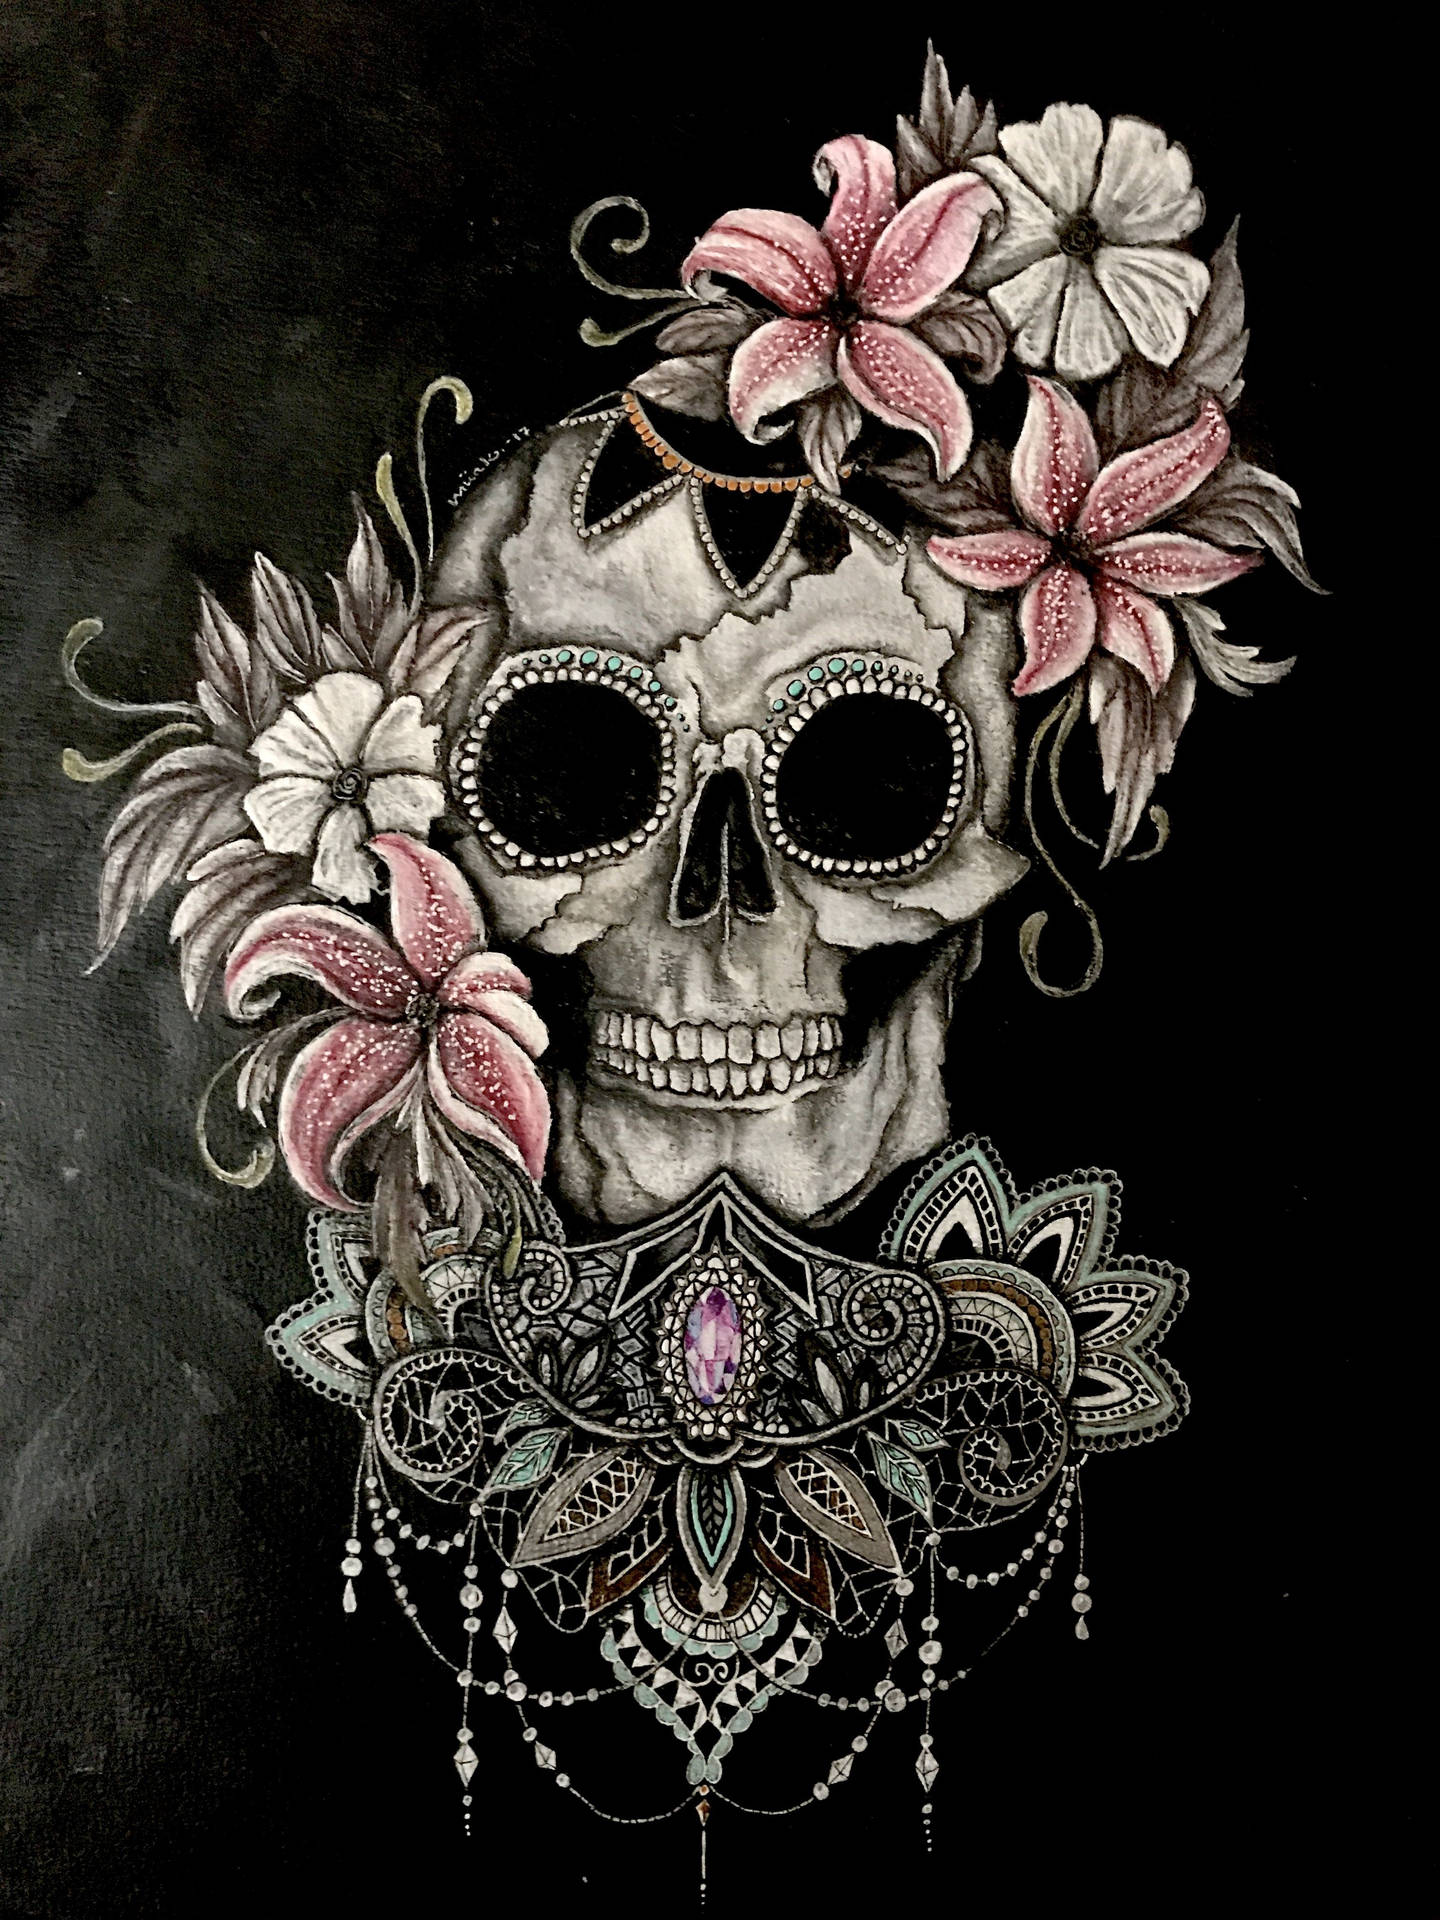 The Chola Sugar Skulls represent life, death and celebration Wallpaper